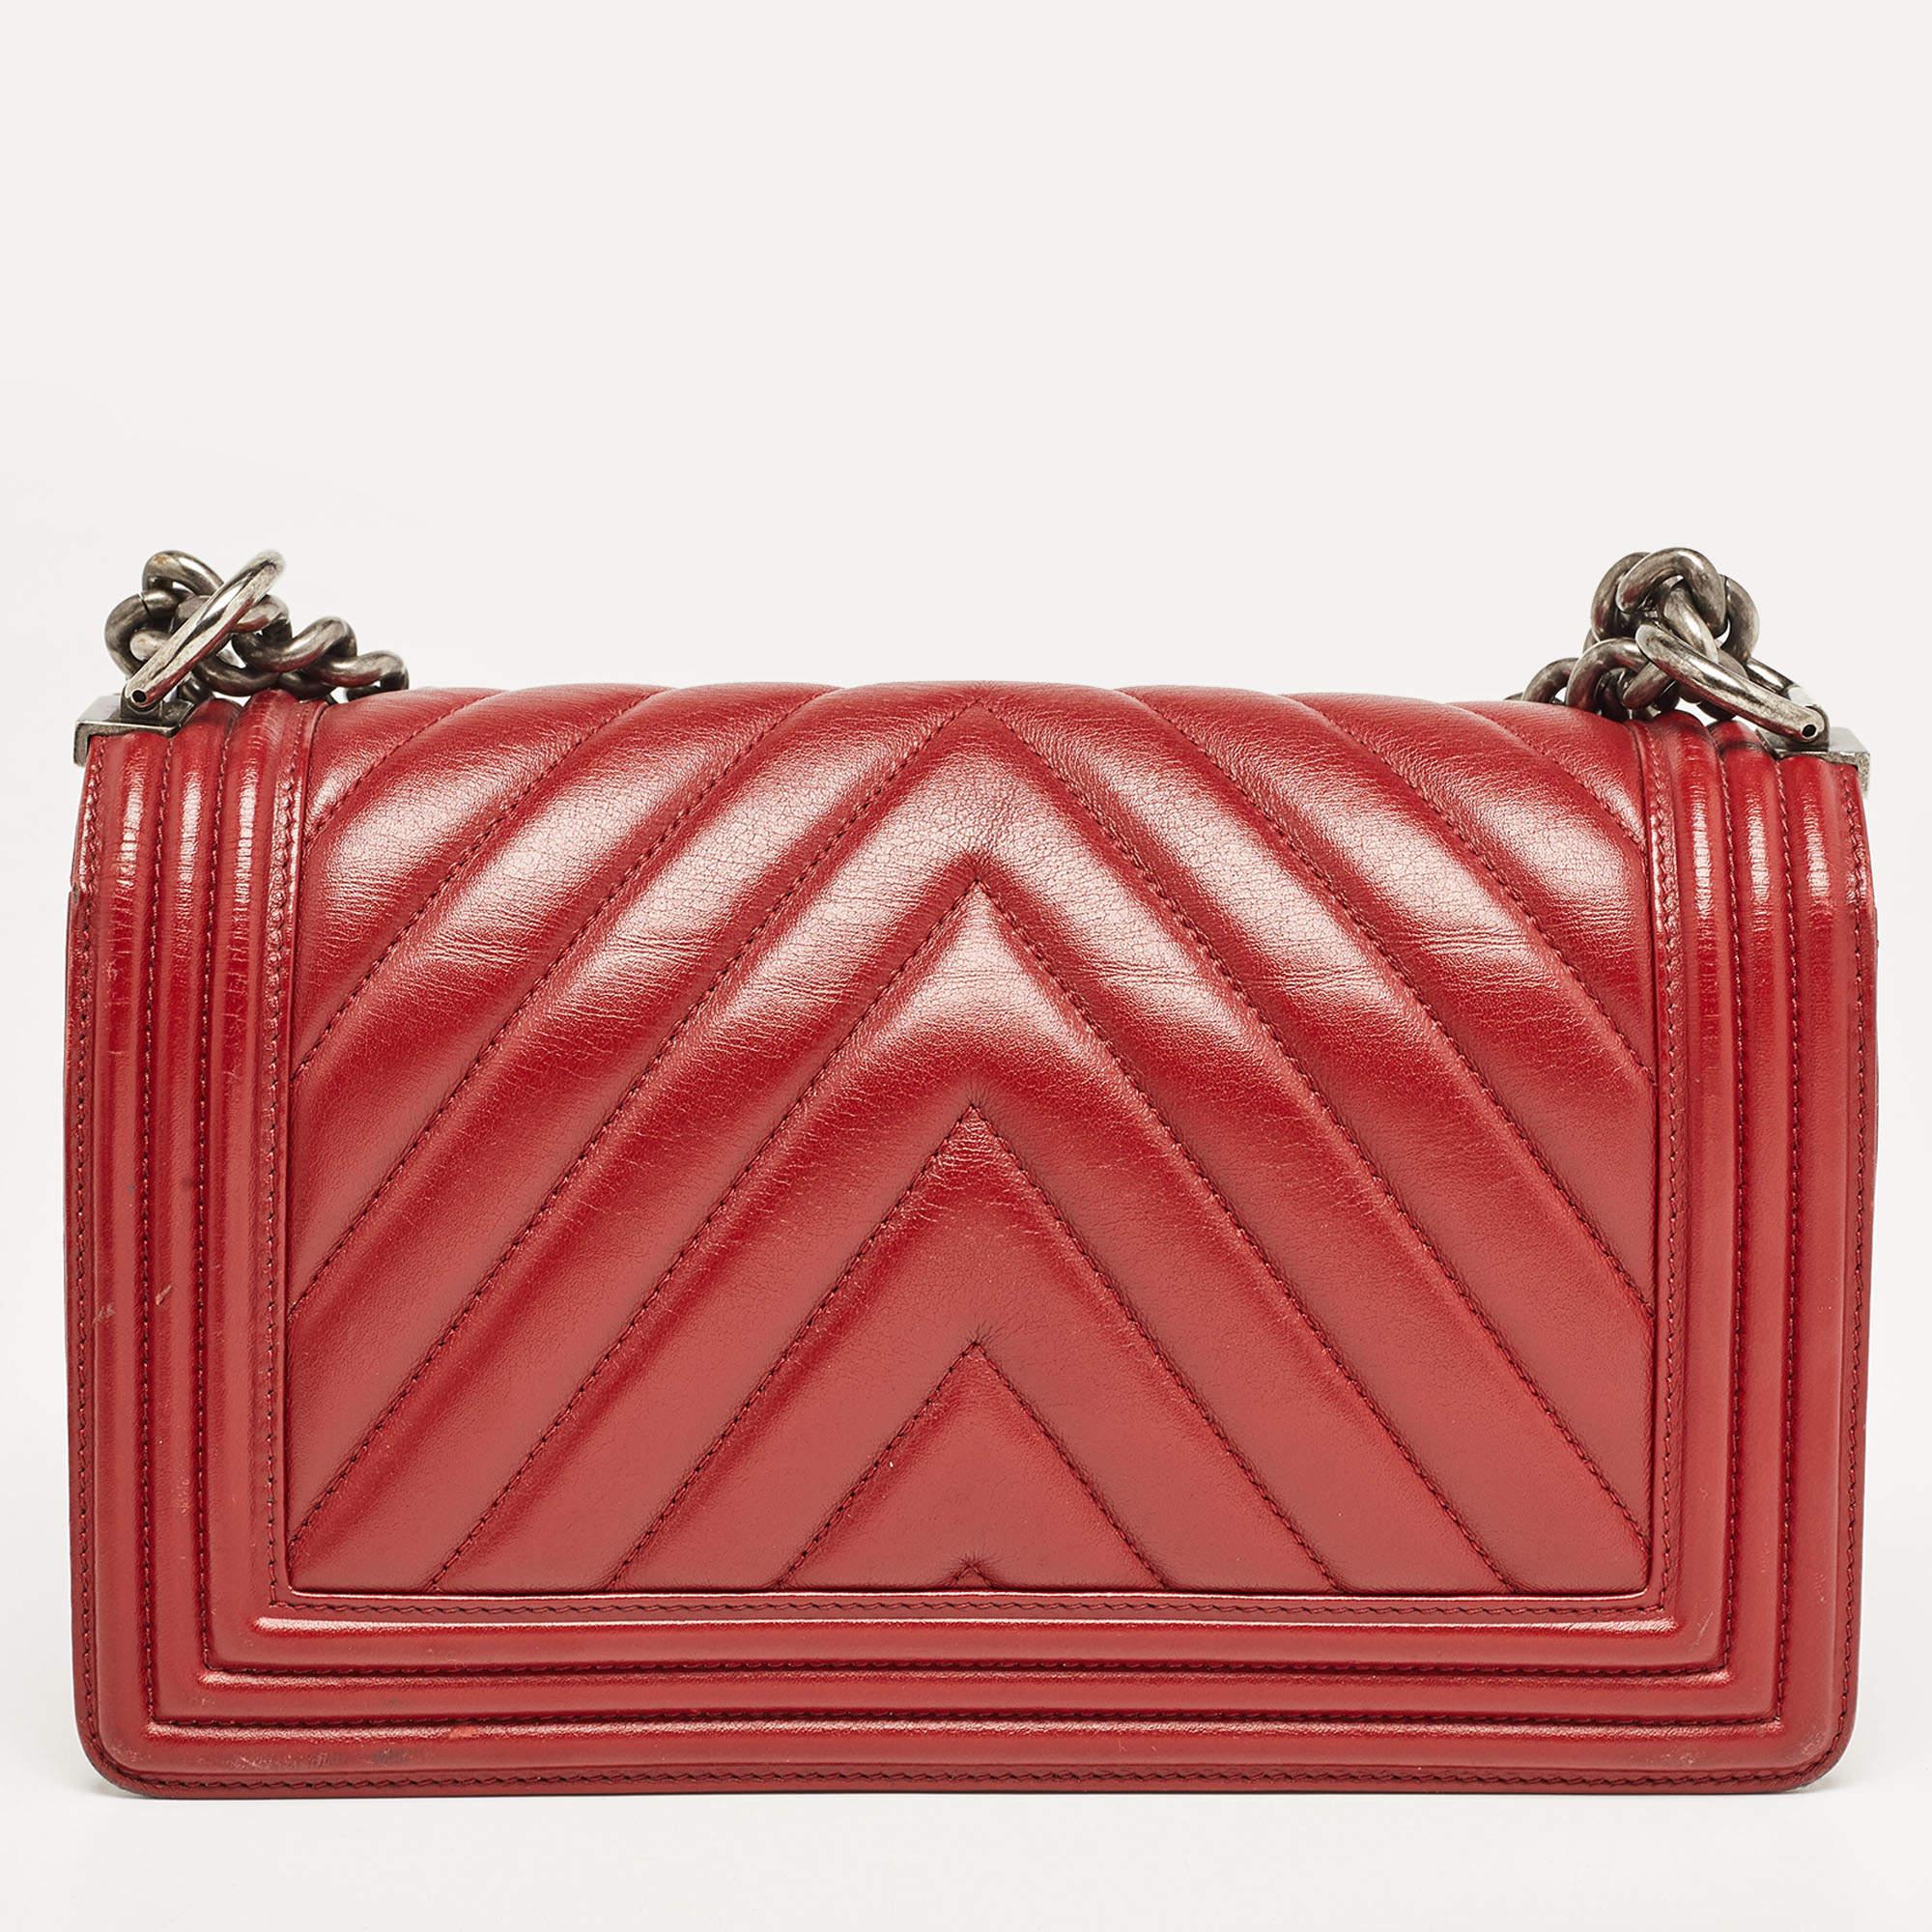 Chanel Red Chevron Leather Medium Boy Bag For Sale 12